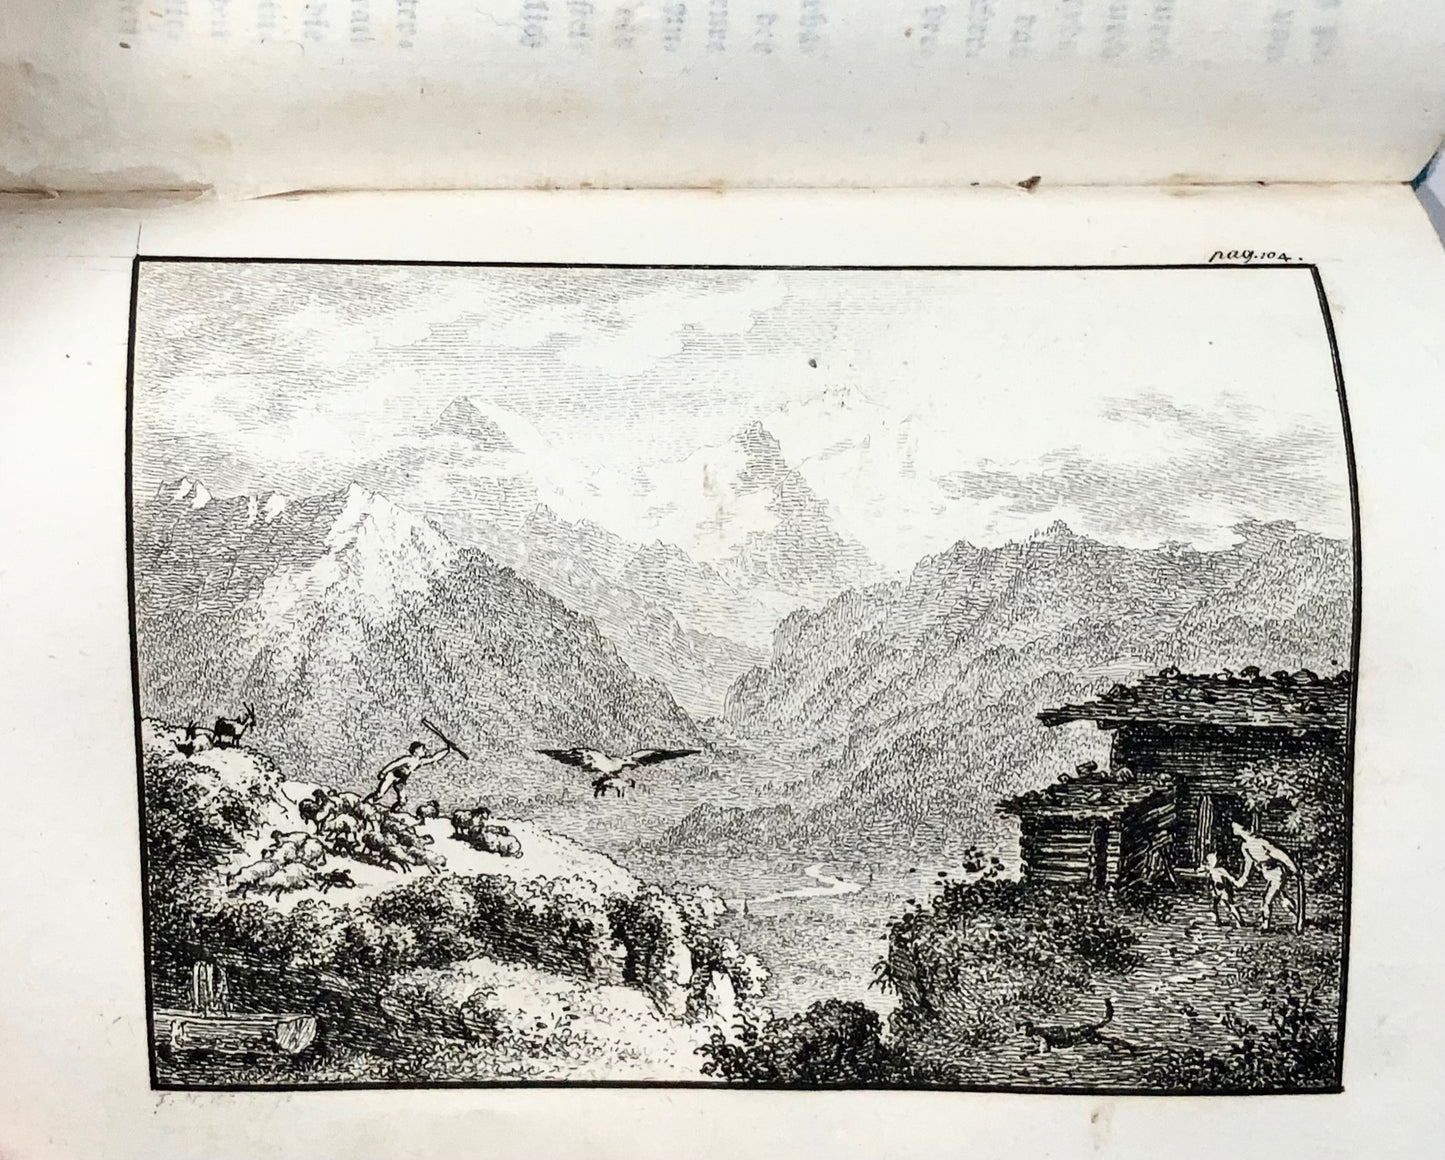 1811 Robinsonade, Almanach, Alpenrosen, Kuhn, Meisner, Wyss, 6 planches, 2 notations musicales, littérature, Suisse